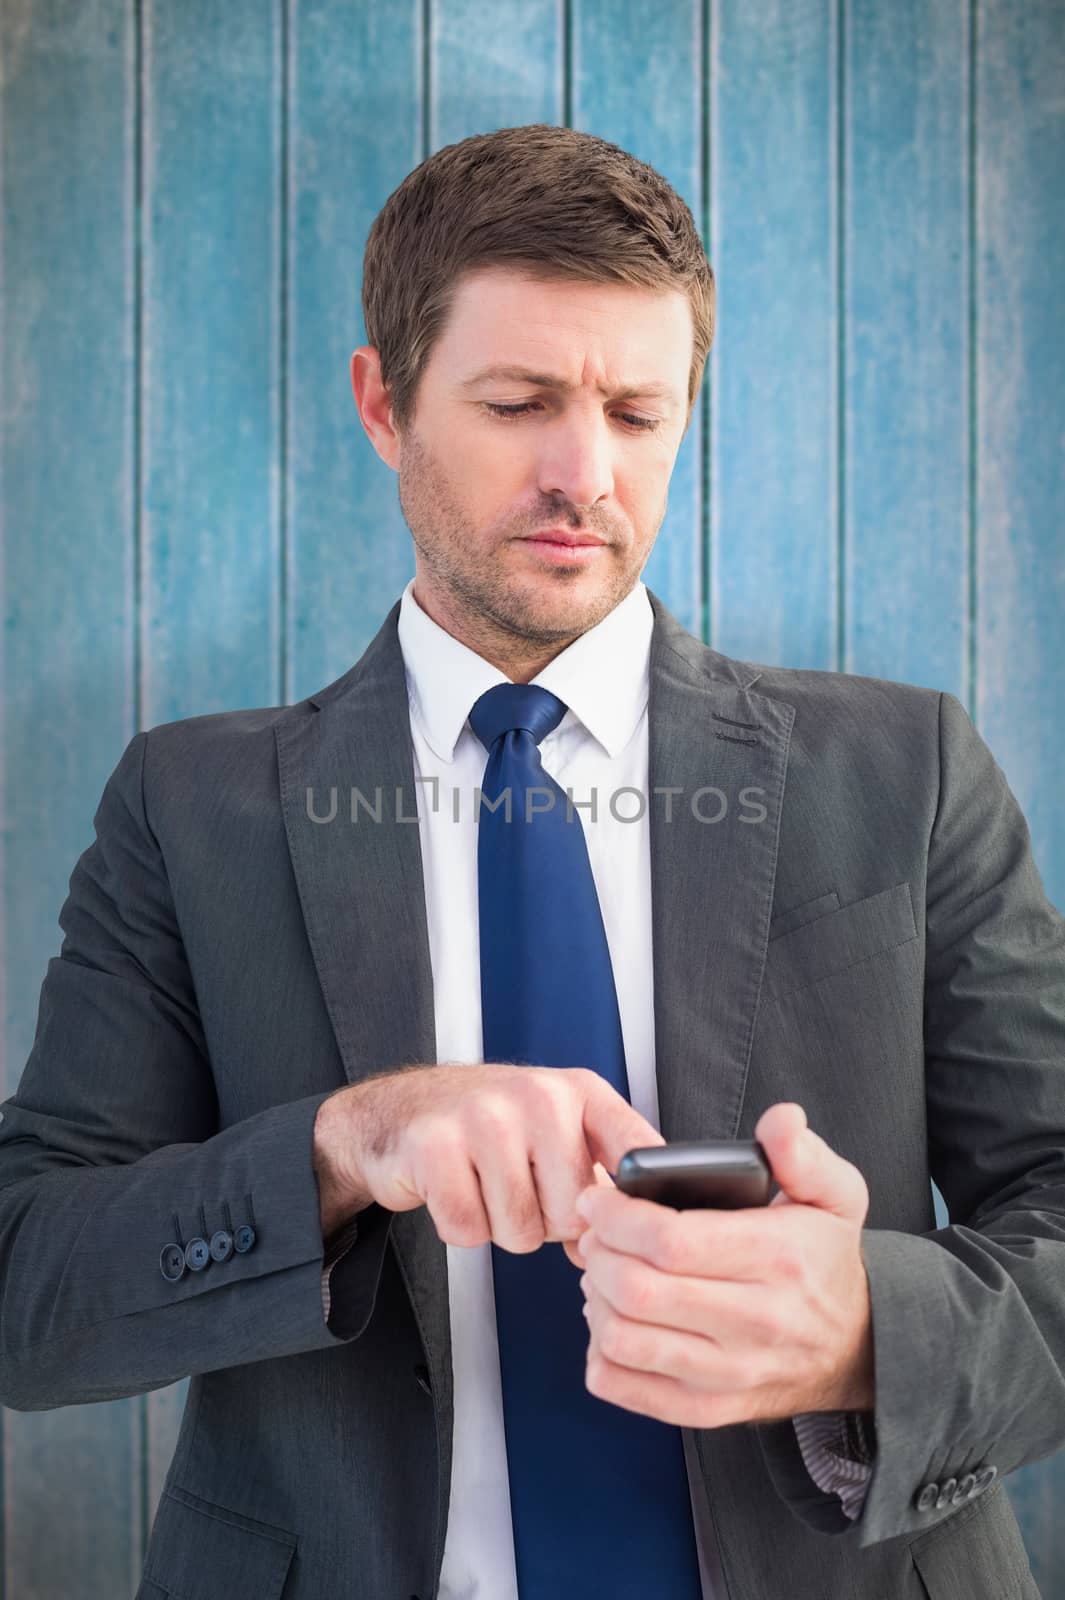 Businessman sending a text message against wooden planks